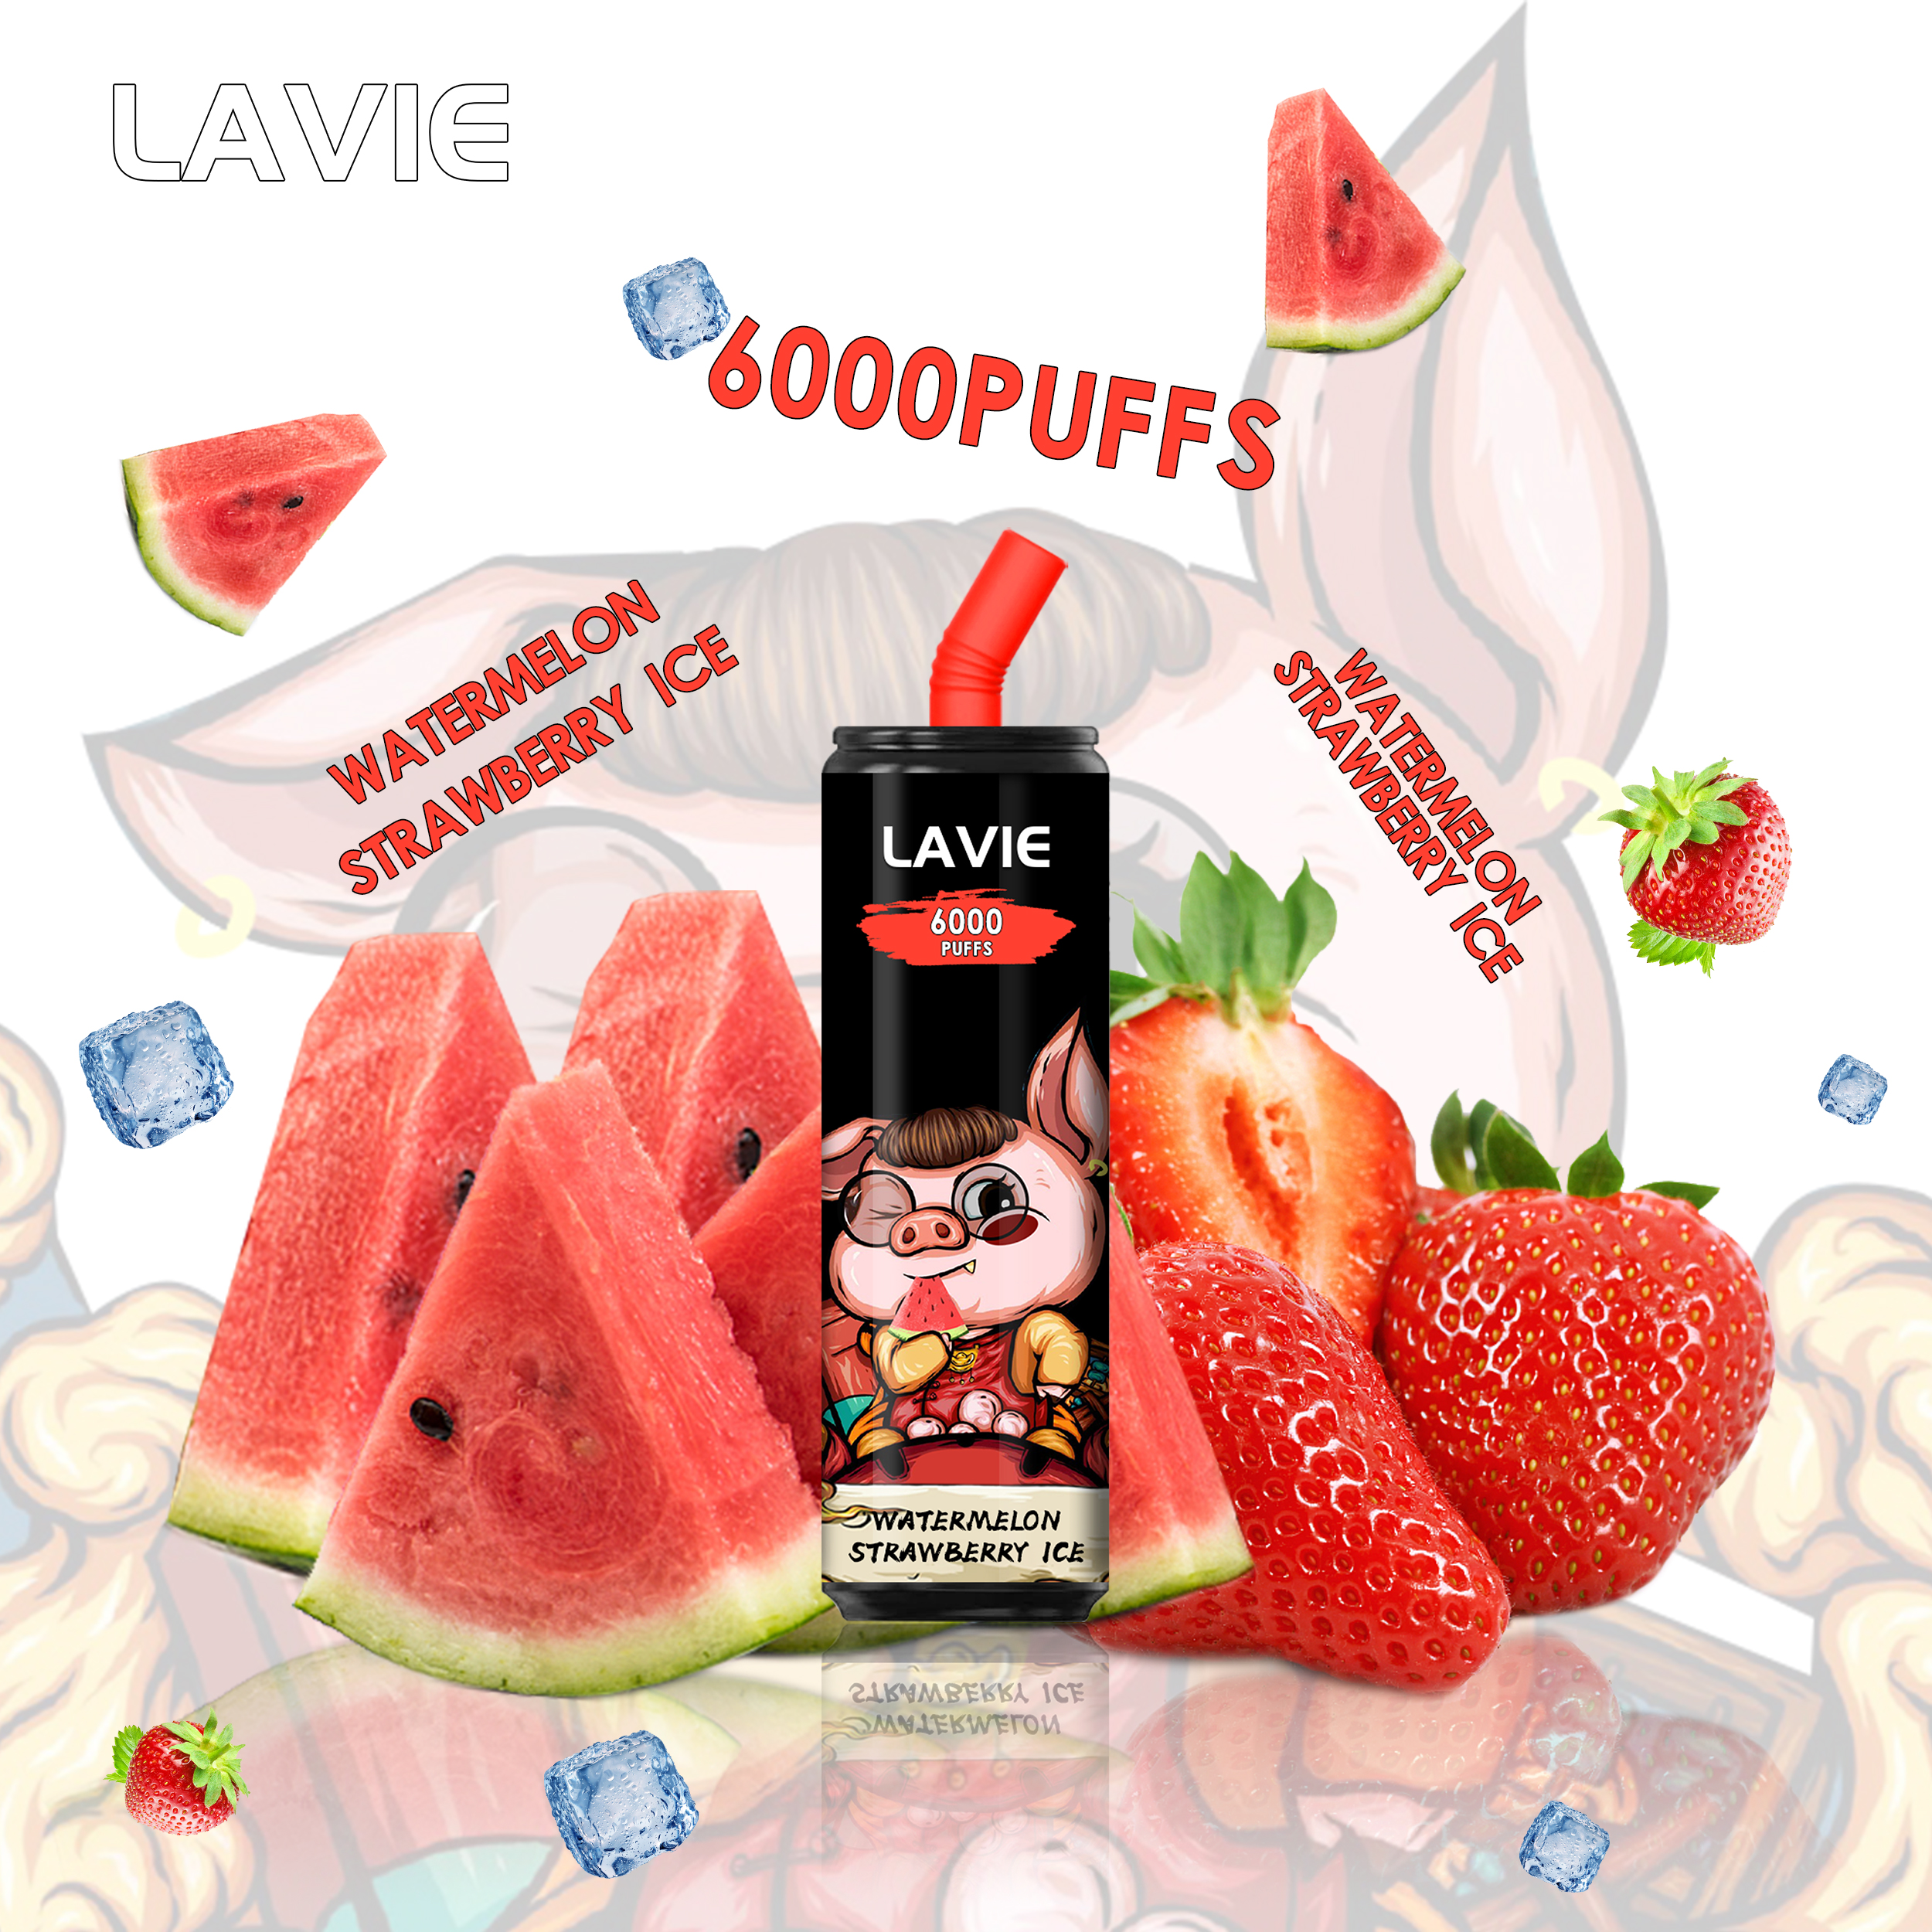 Lavie coke bar 6000 9